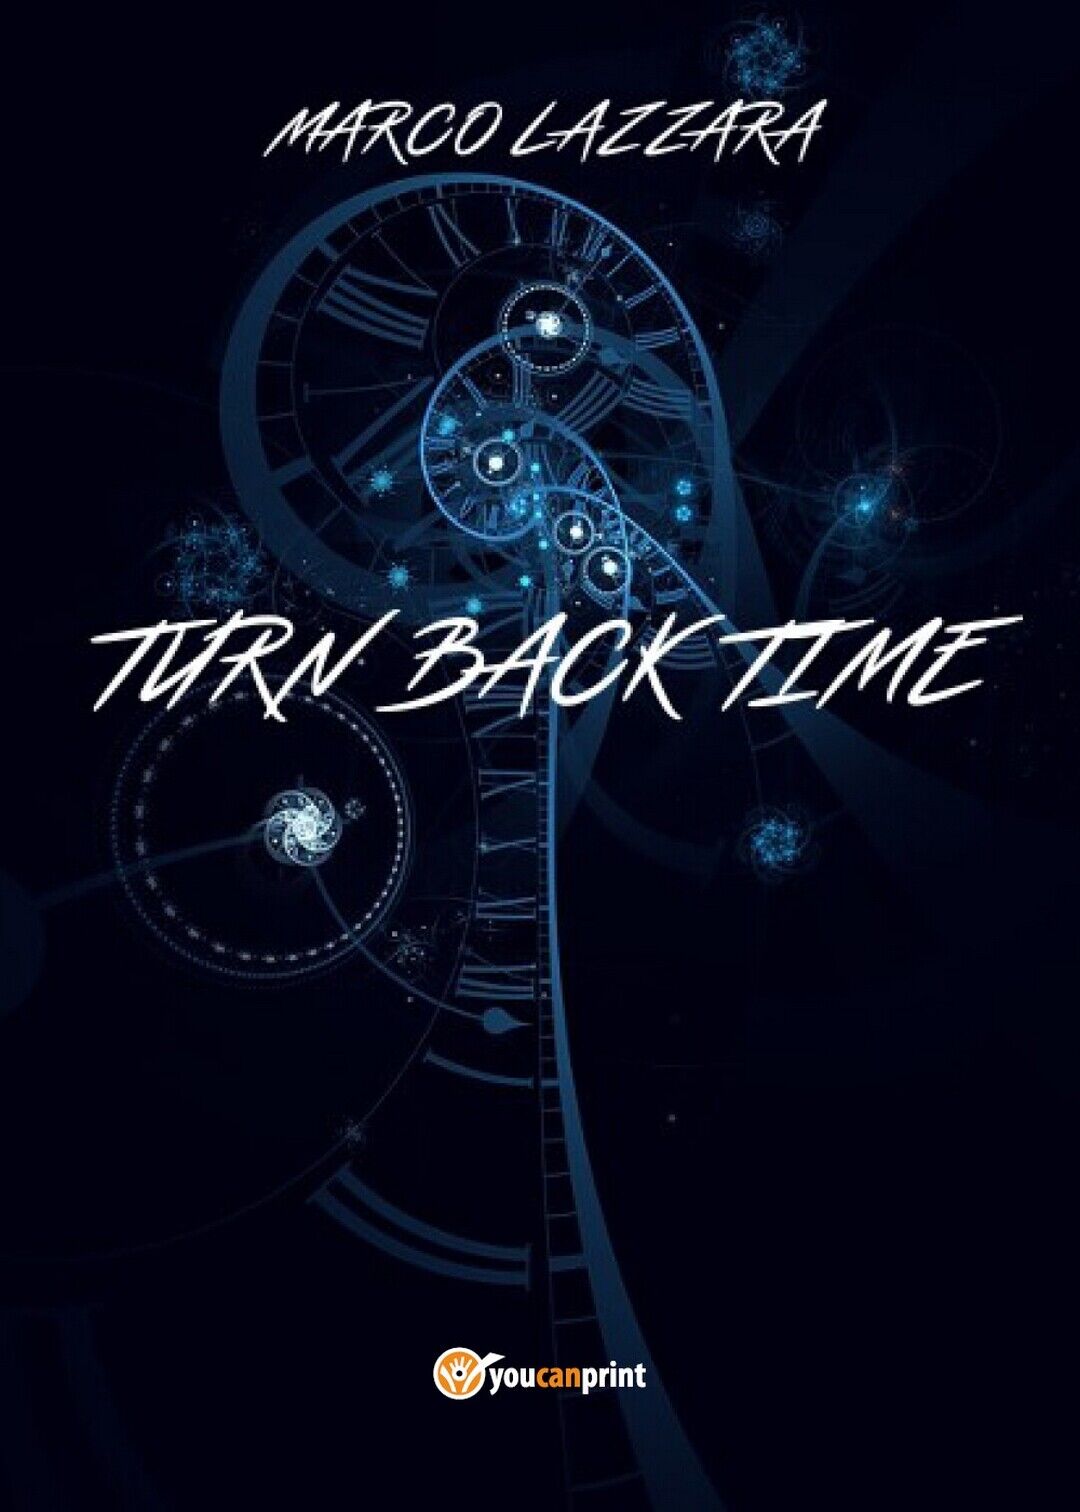 Turn Back Time  di Marco Lazzara,  2019,  Youcanprint